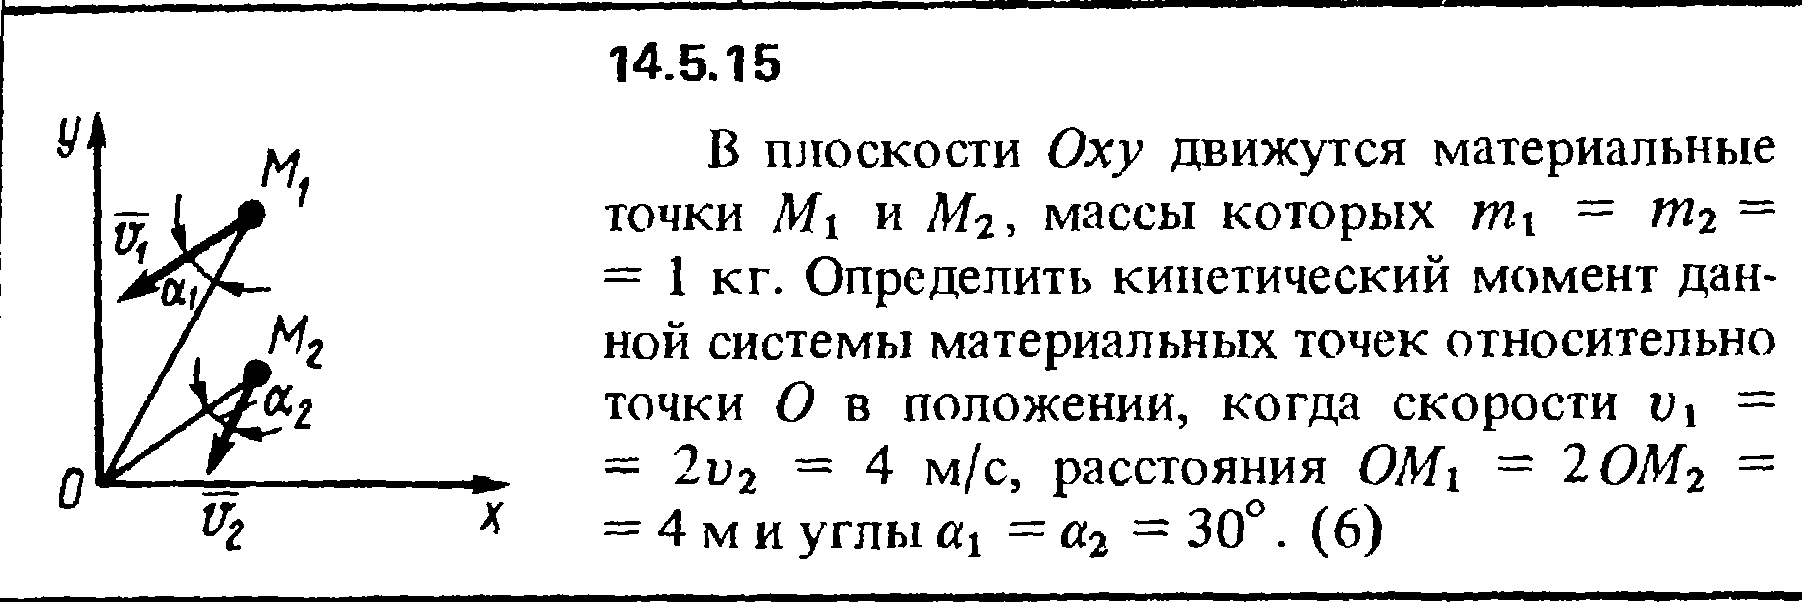 Решение задачи 14.5.15 из сборника Кепе О.Е. 1989 года